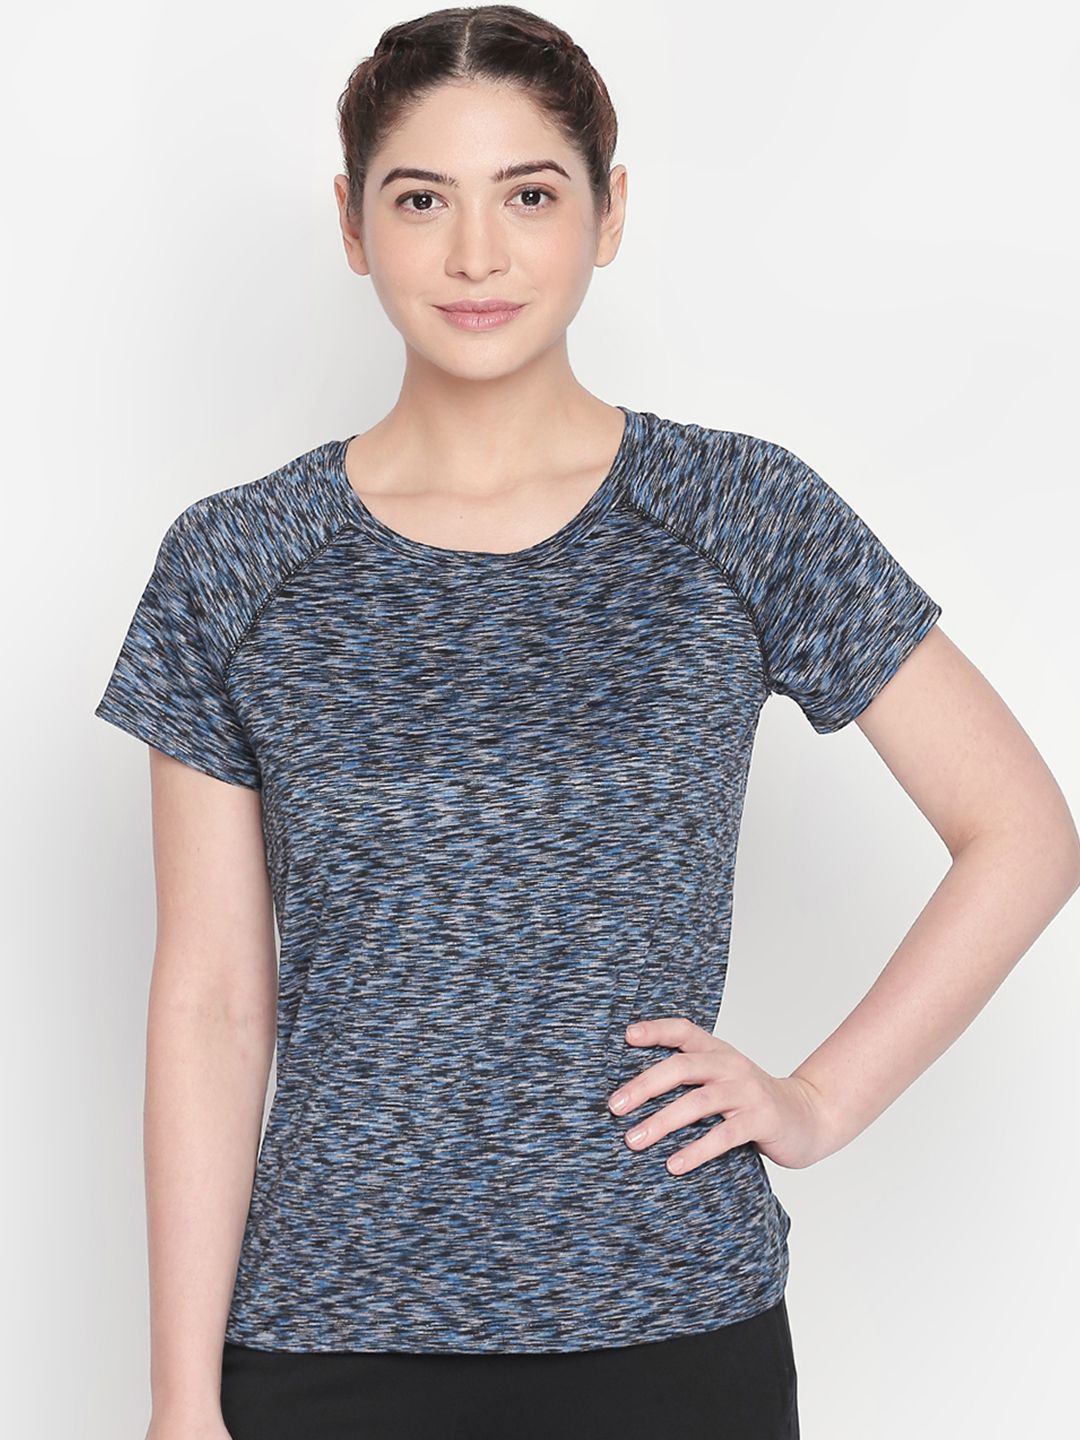 Ajile by Pantaloons Women Grey Self Design Round Neck T-shirt Price in India